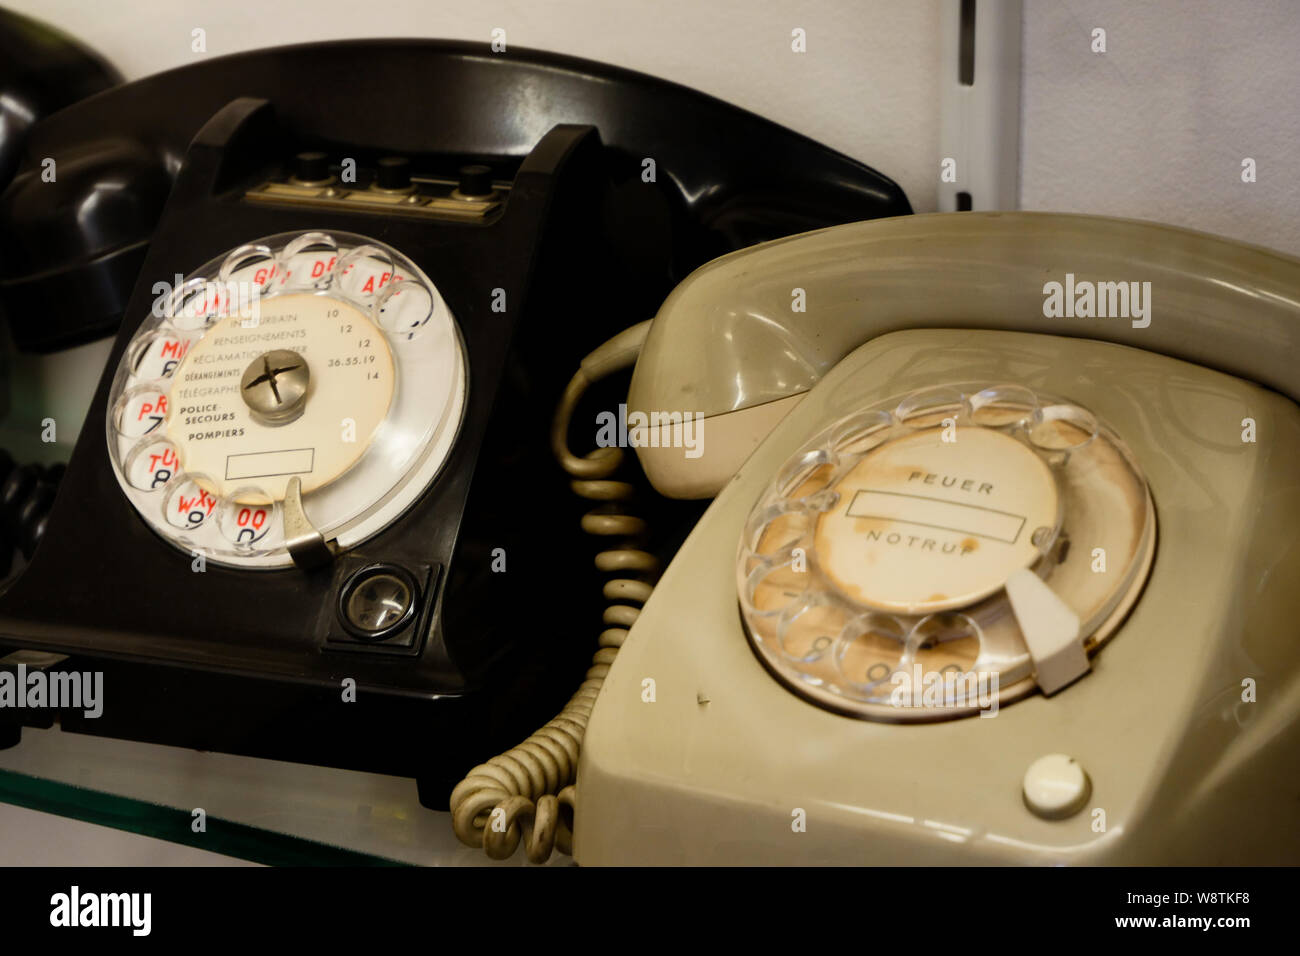 Old telephones, Saint-Jean du Gard, Gard, France Stock Photo